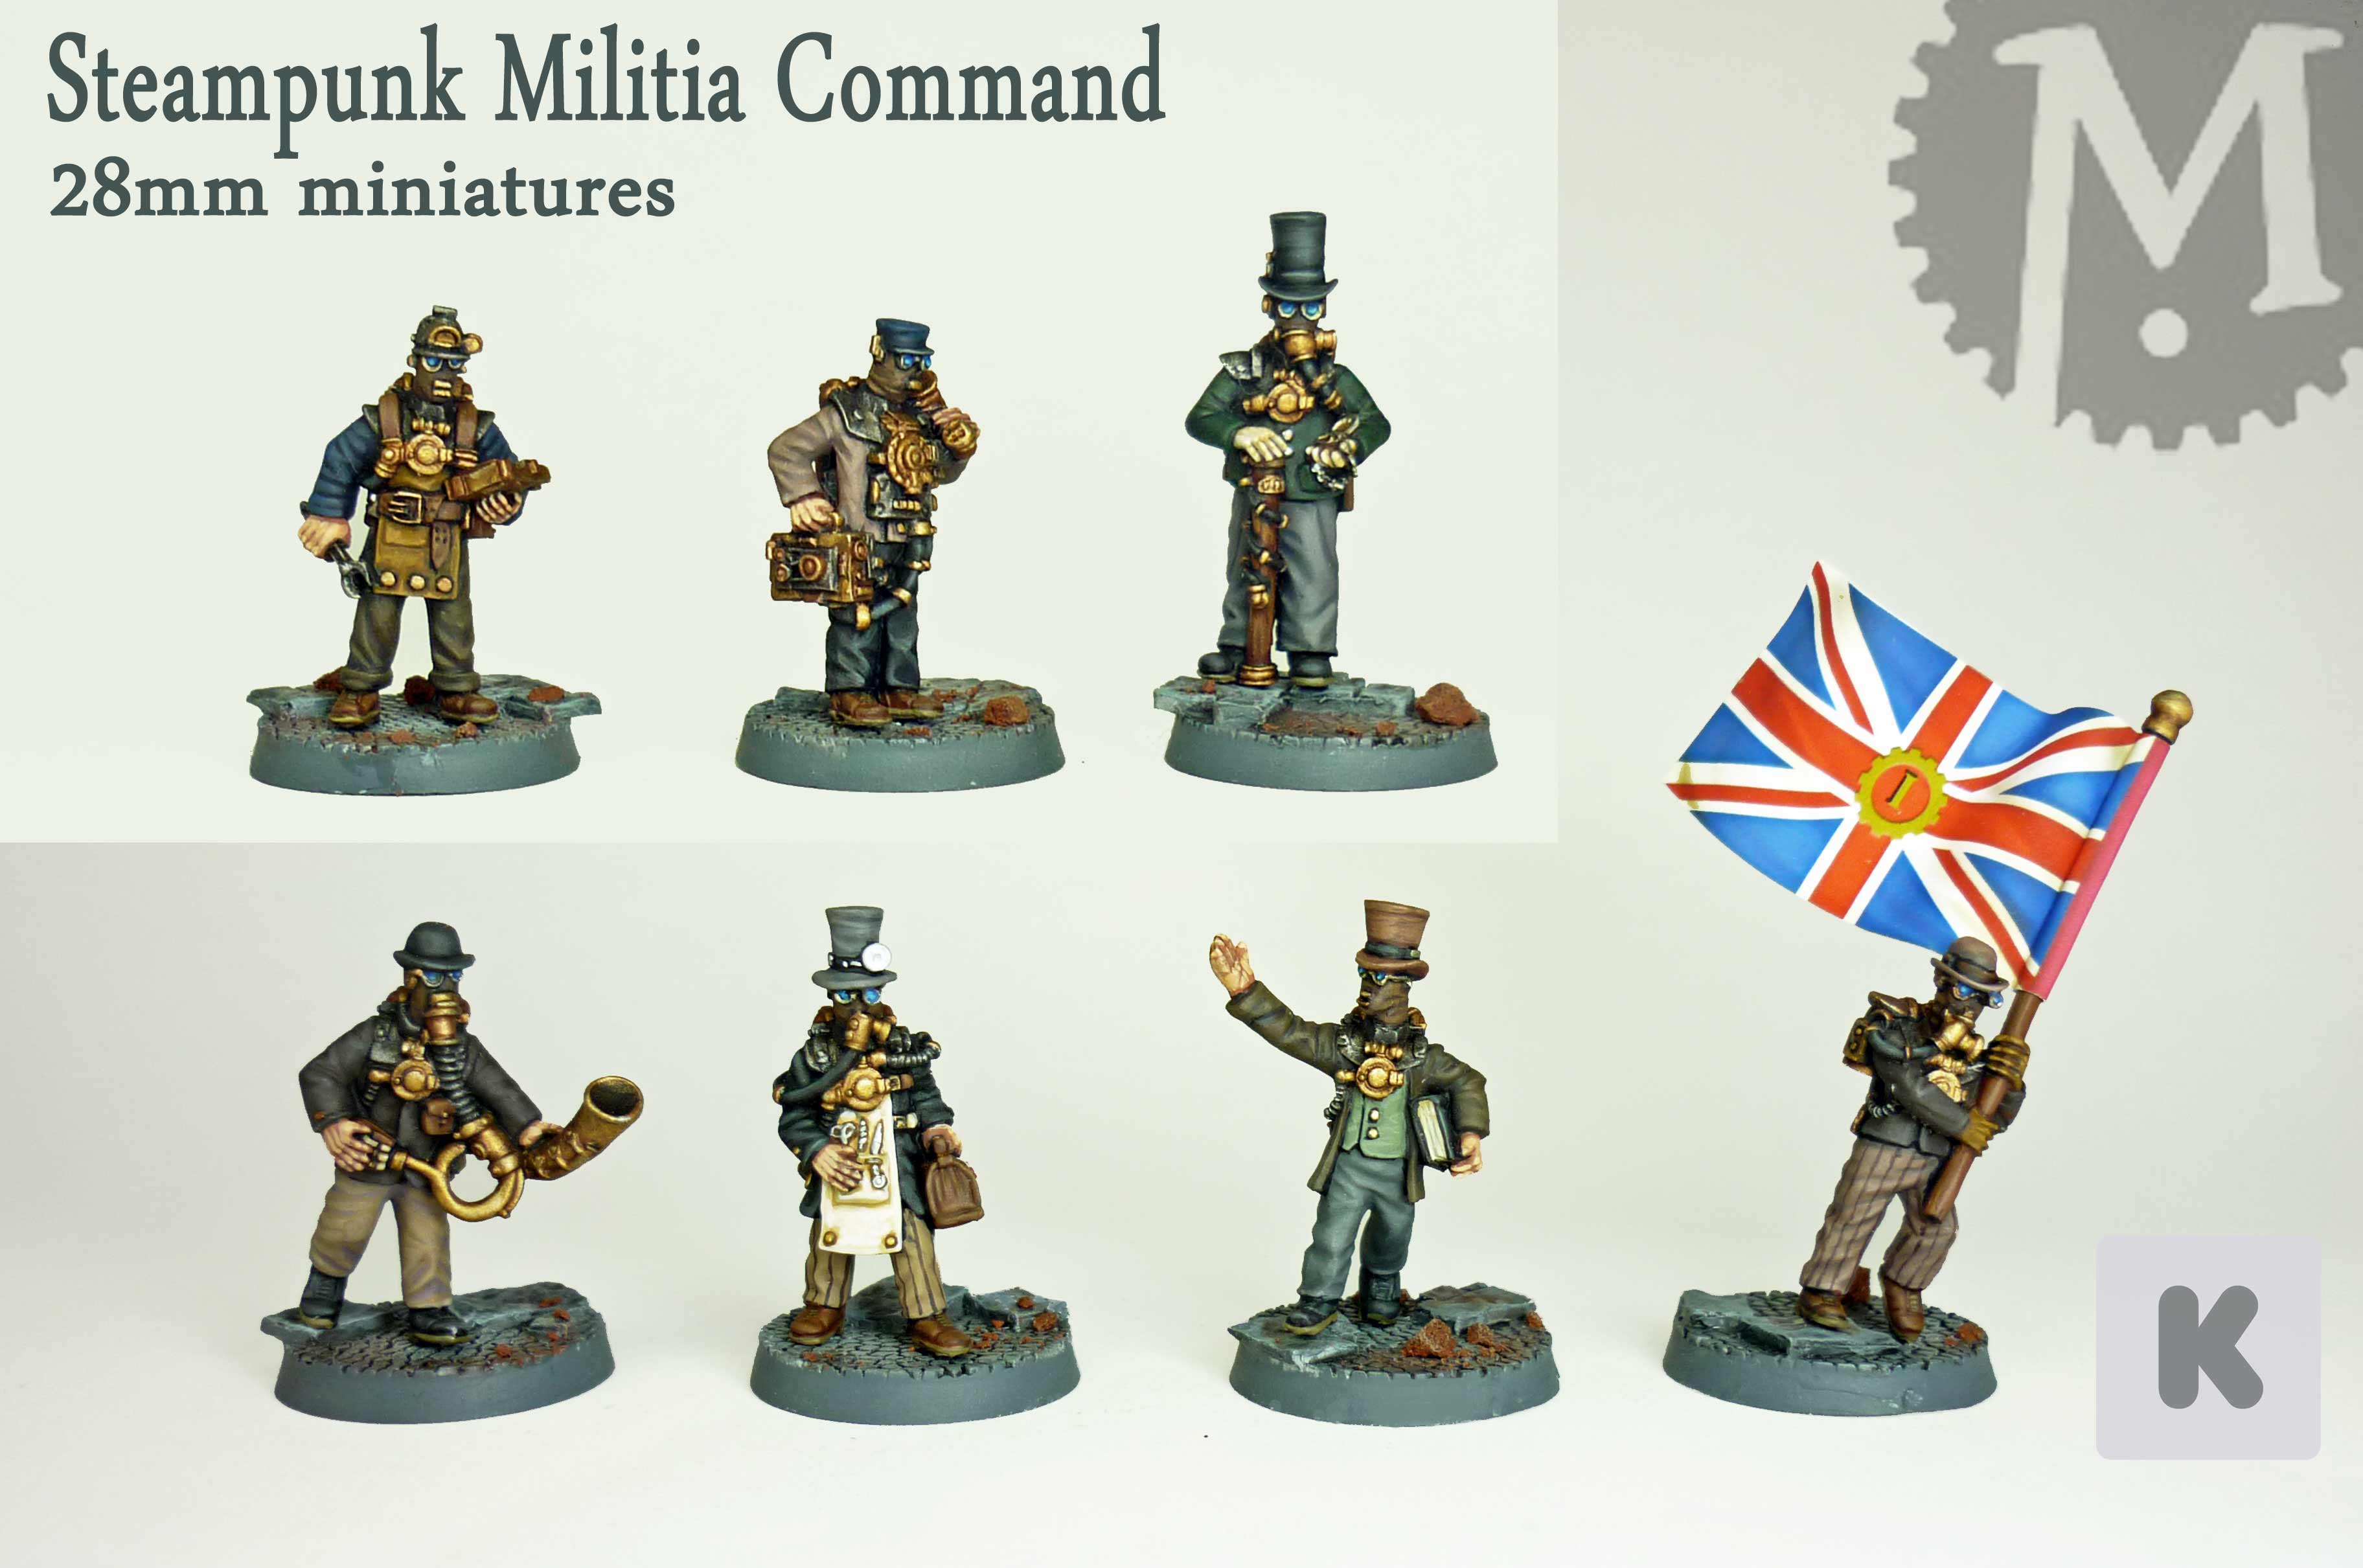 Steampunk militia arrive on Kickstarter